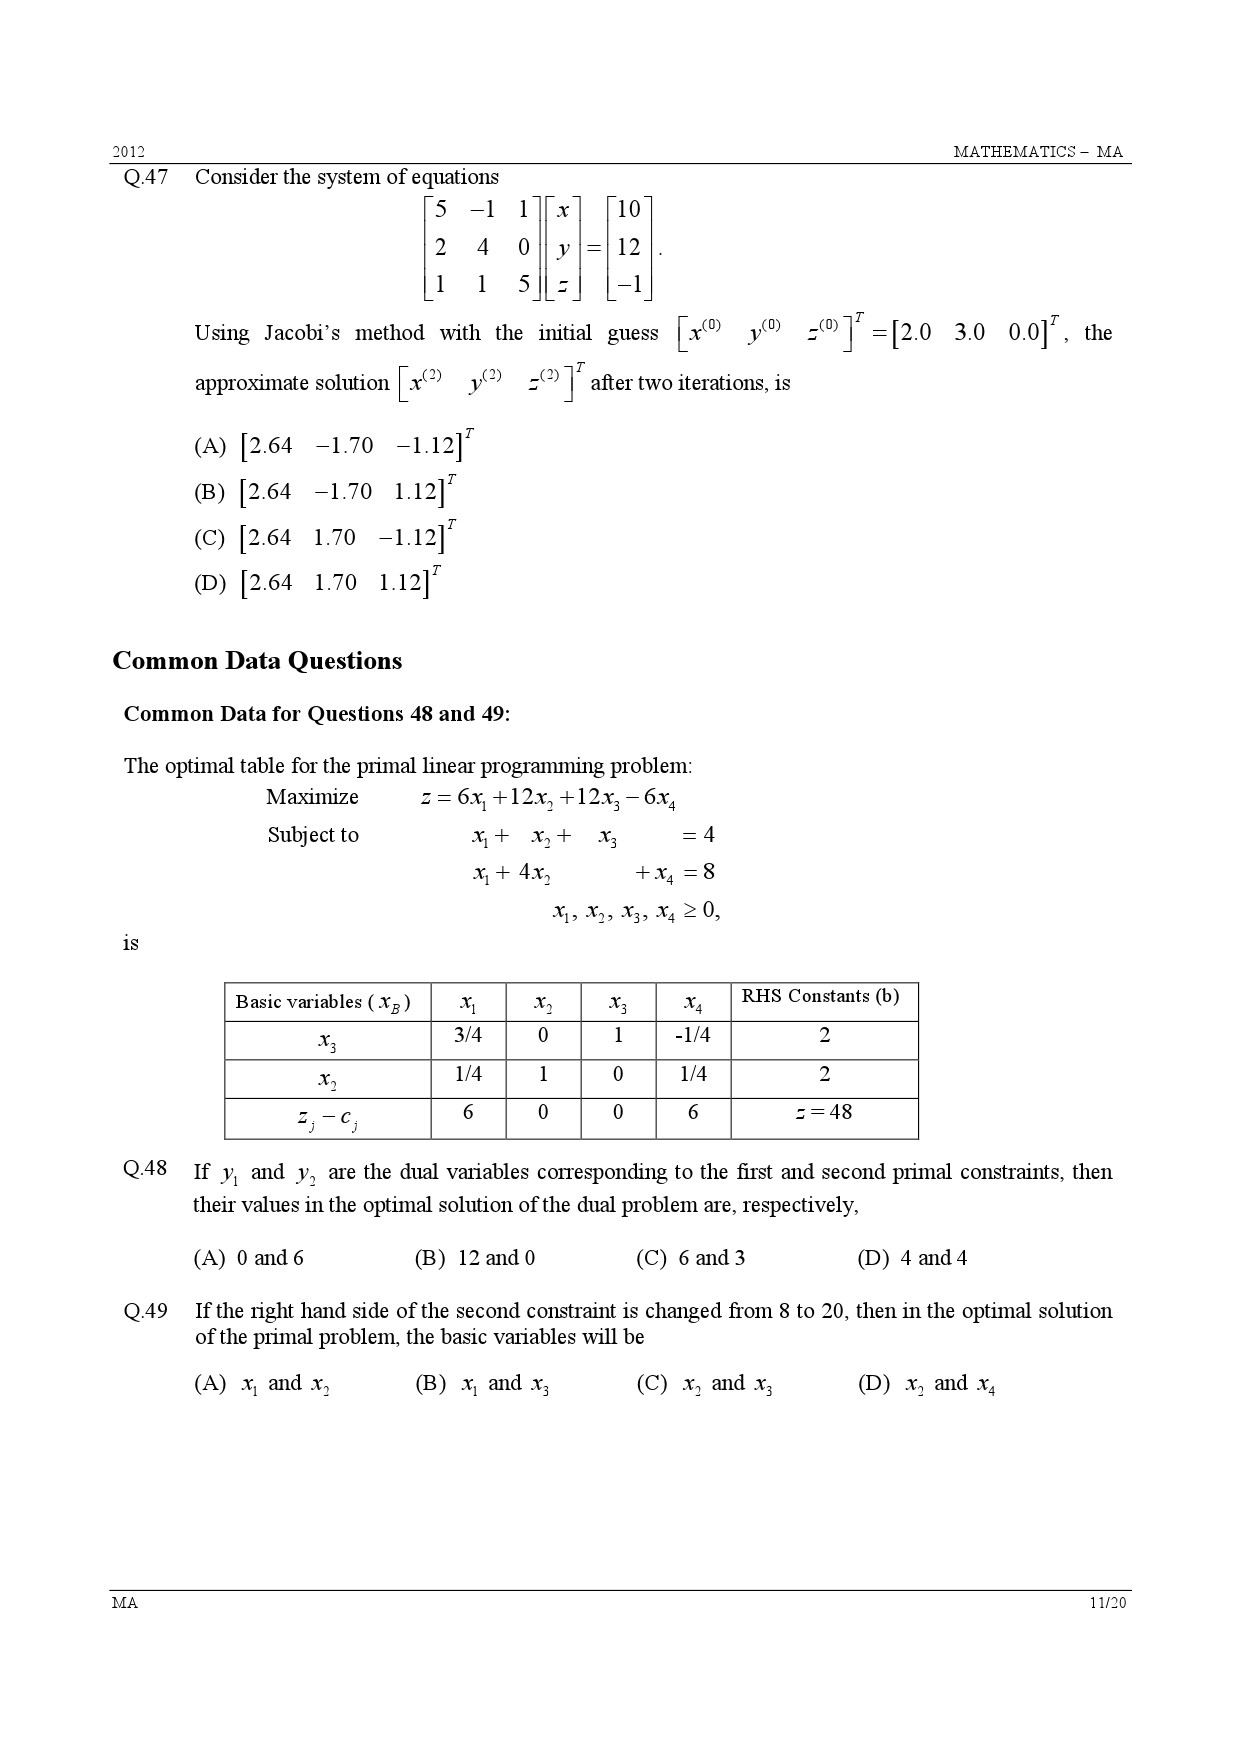 GATE Exam Question Paper 2012 Mathematics 11